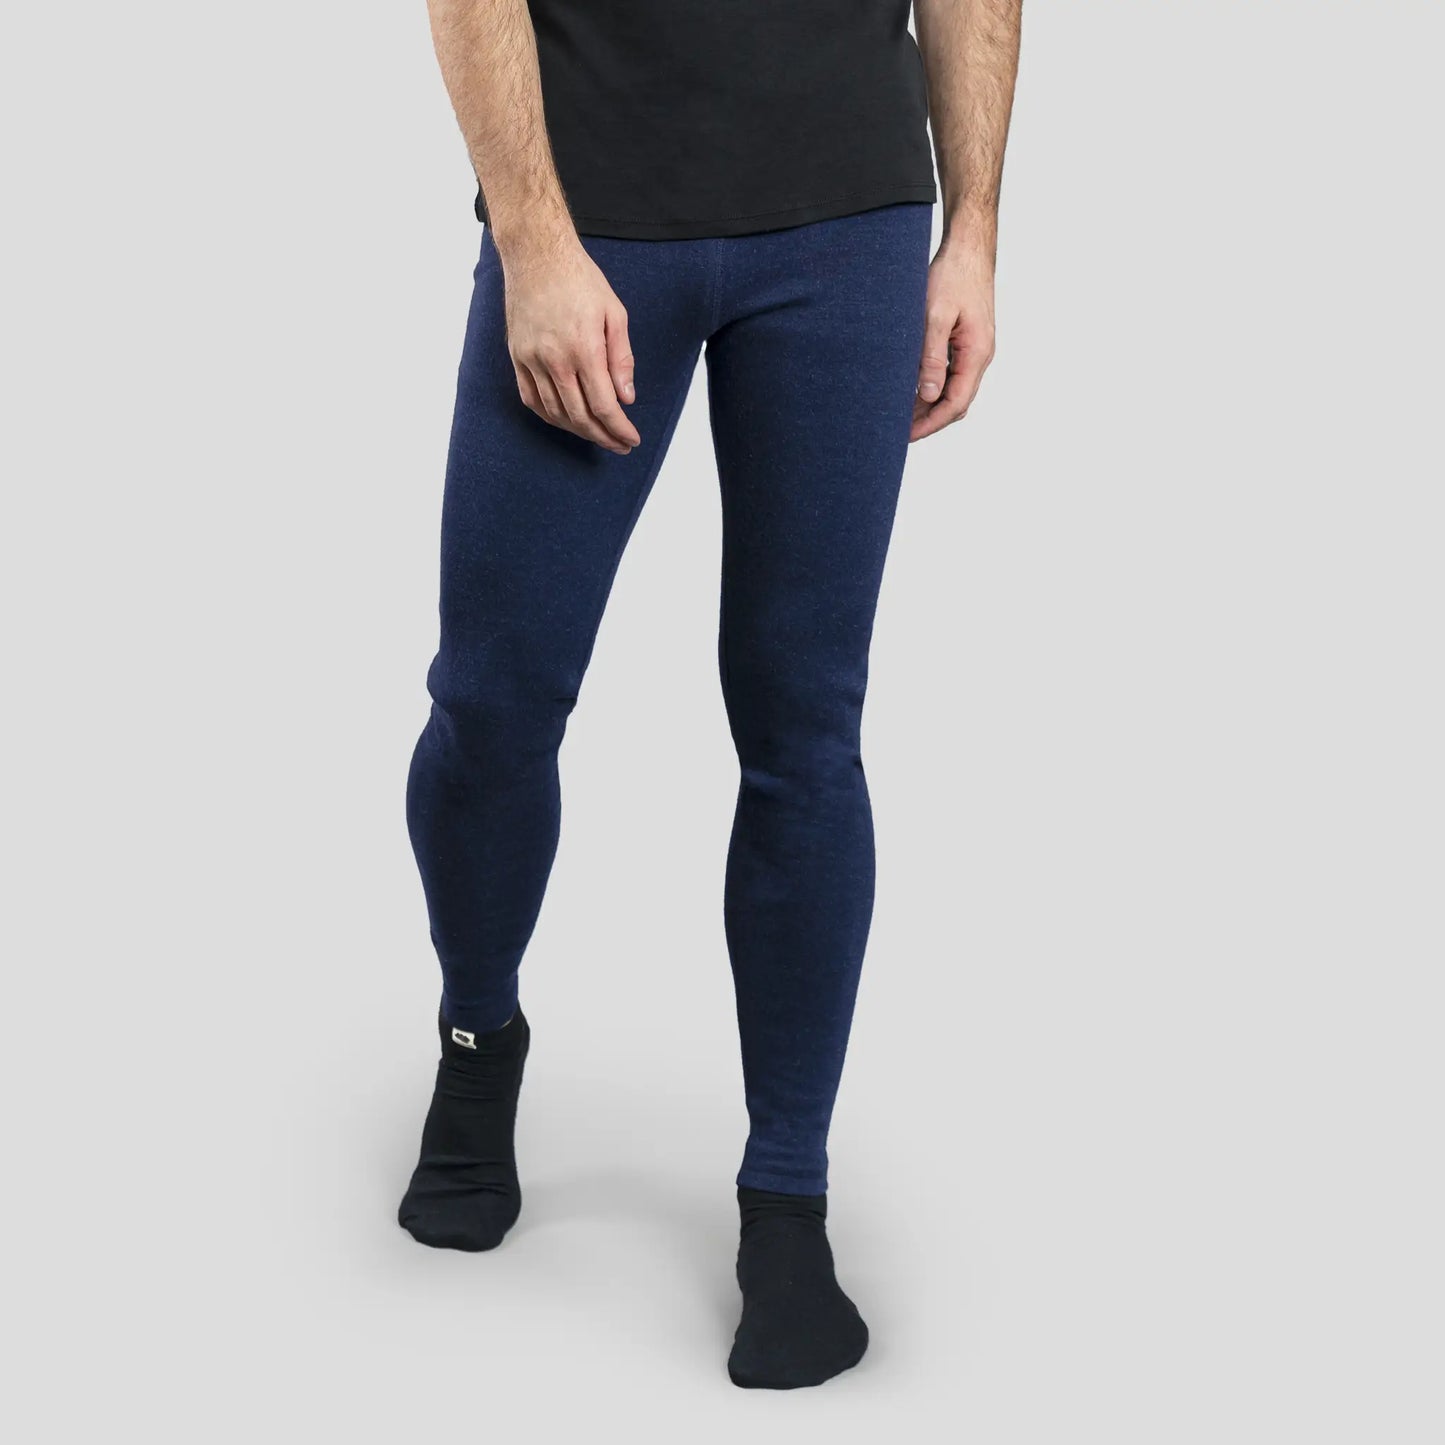 mens uv resistance leggings midweight color navy blue